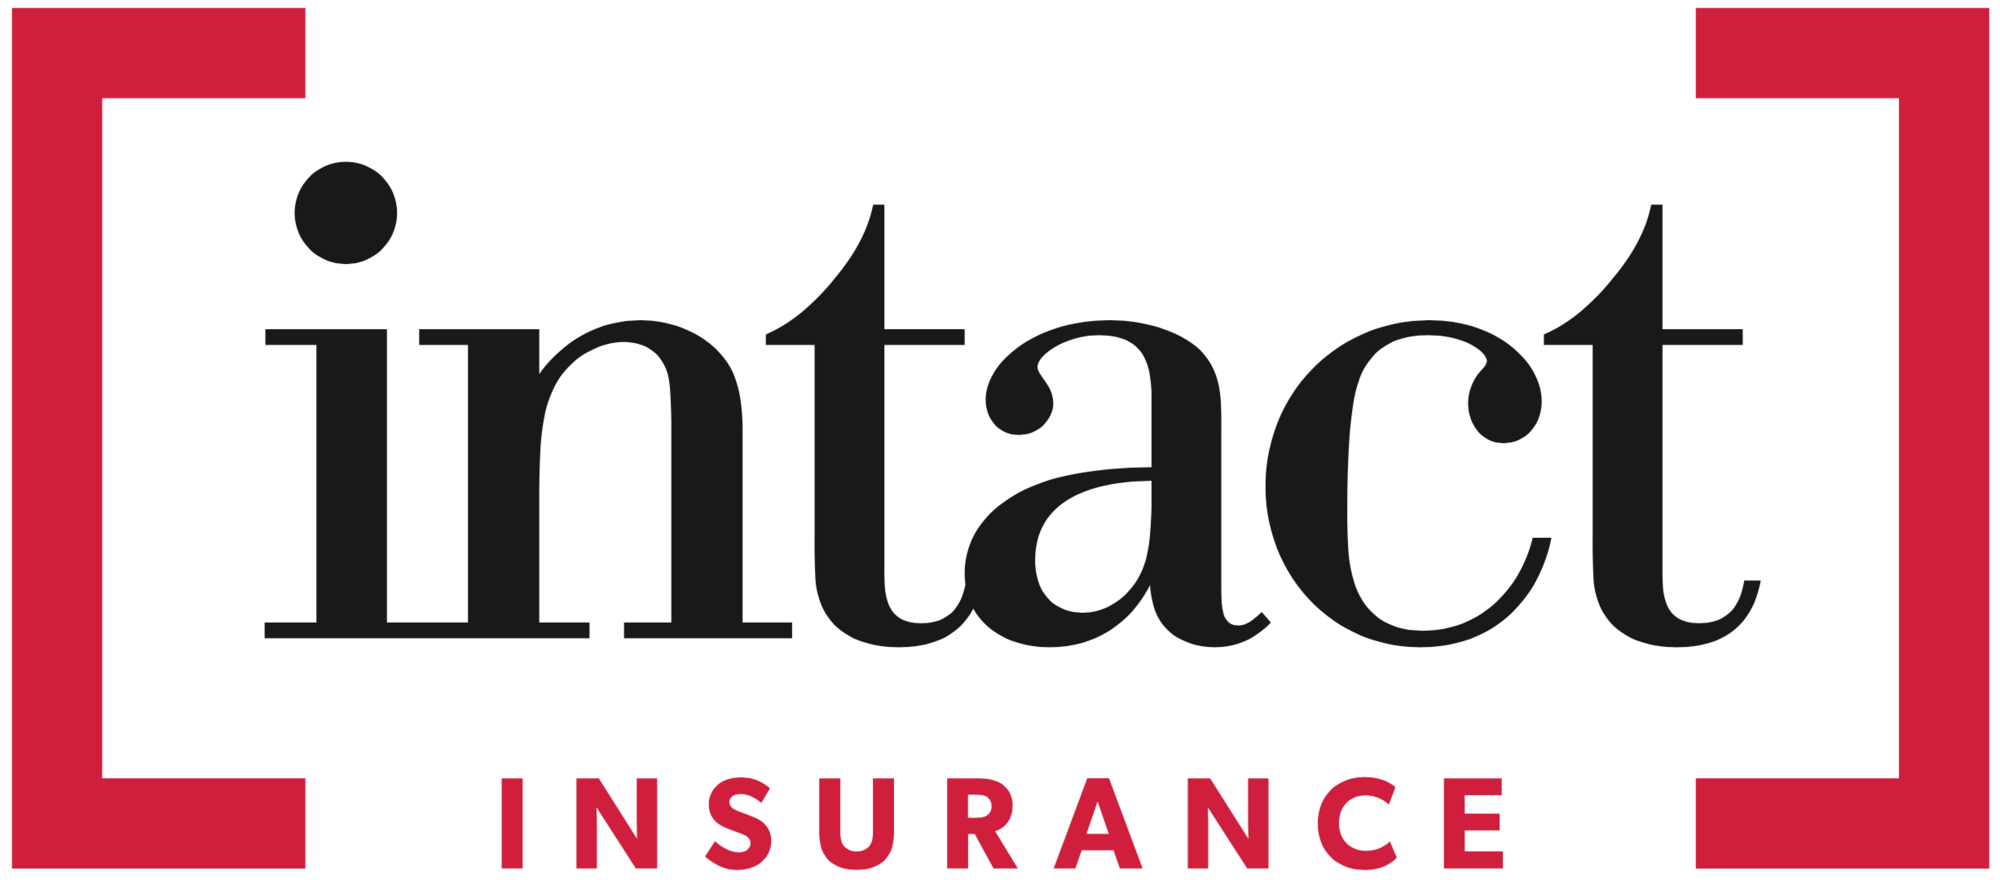 intact insurance logo